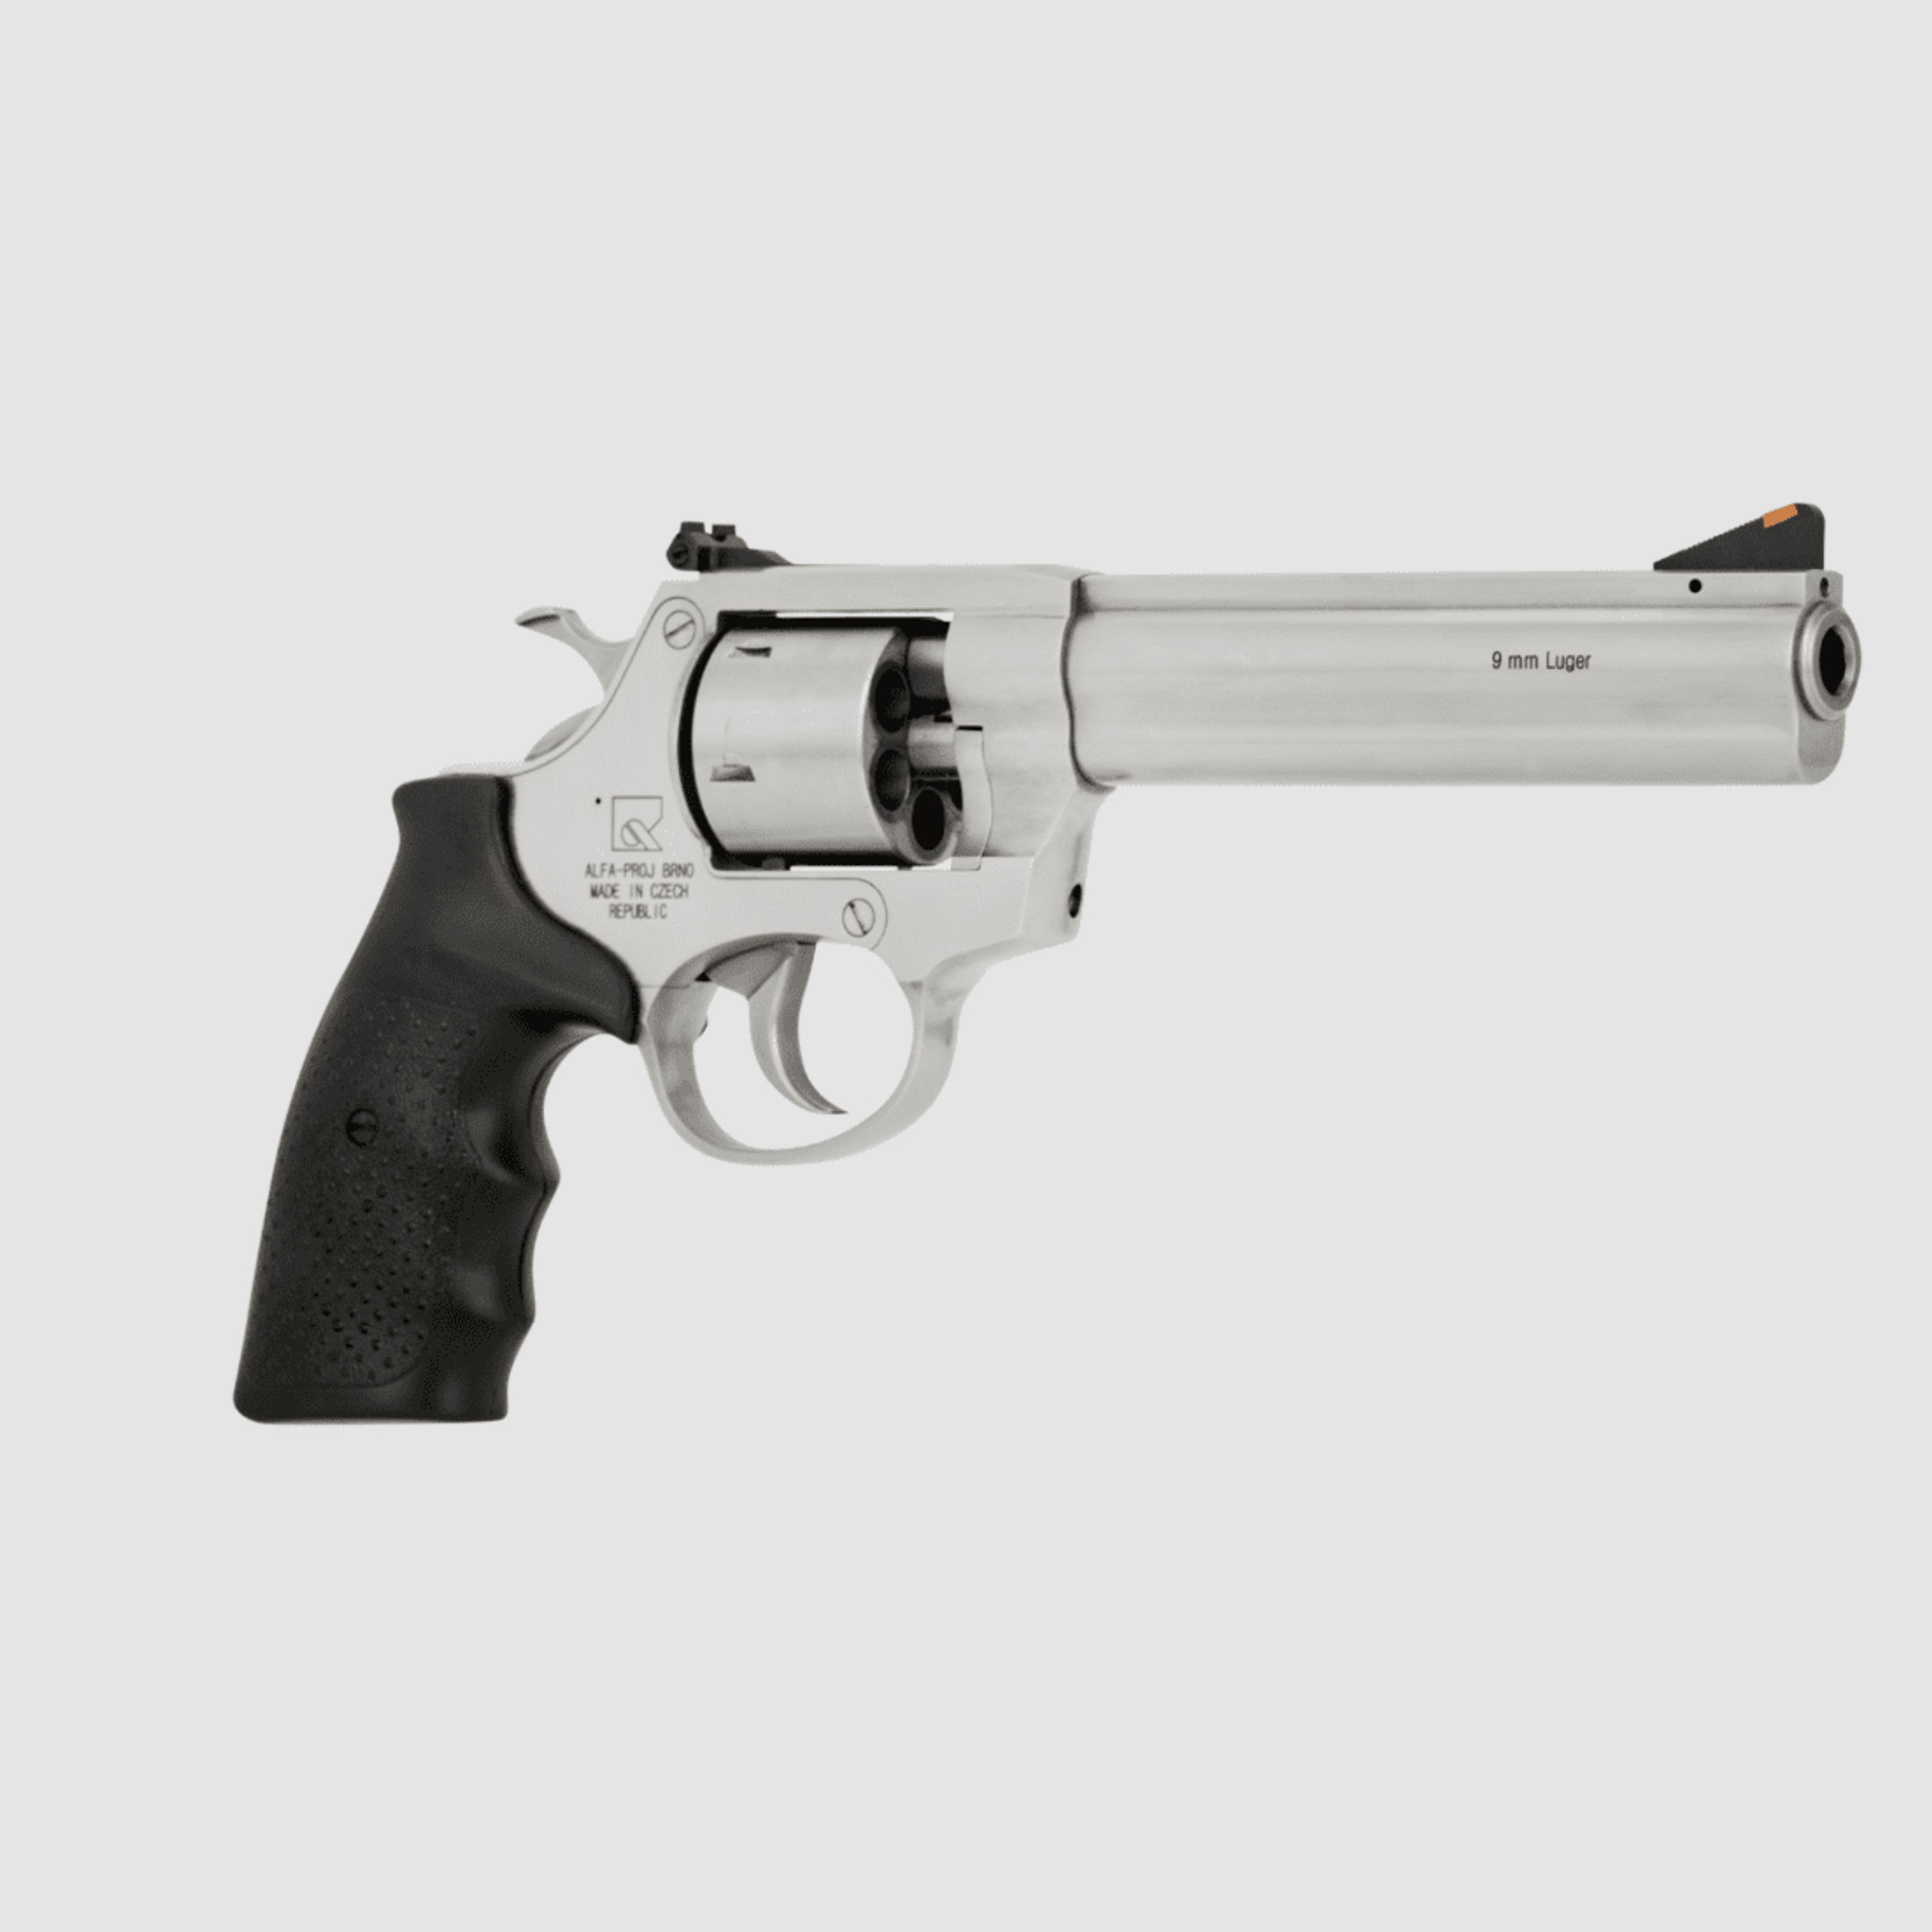 Alfa Proj 9261 stainless - 6 Zoll Revolver Kal. 9mm Luger